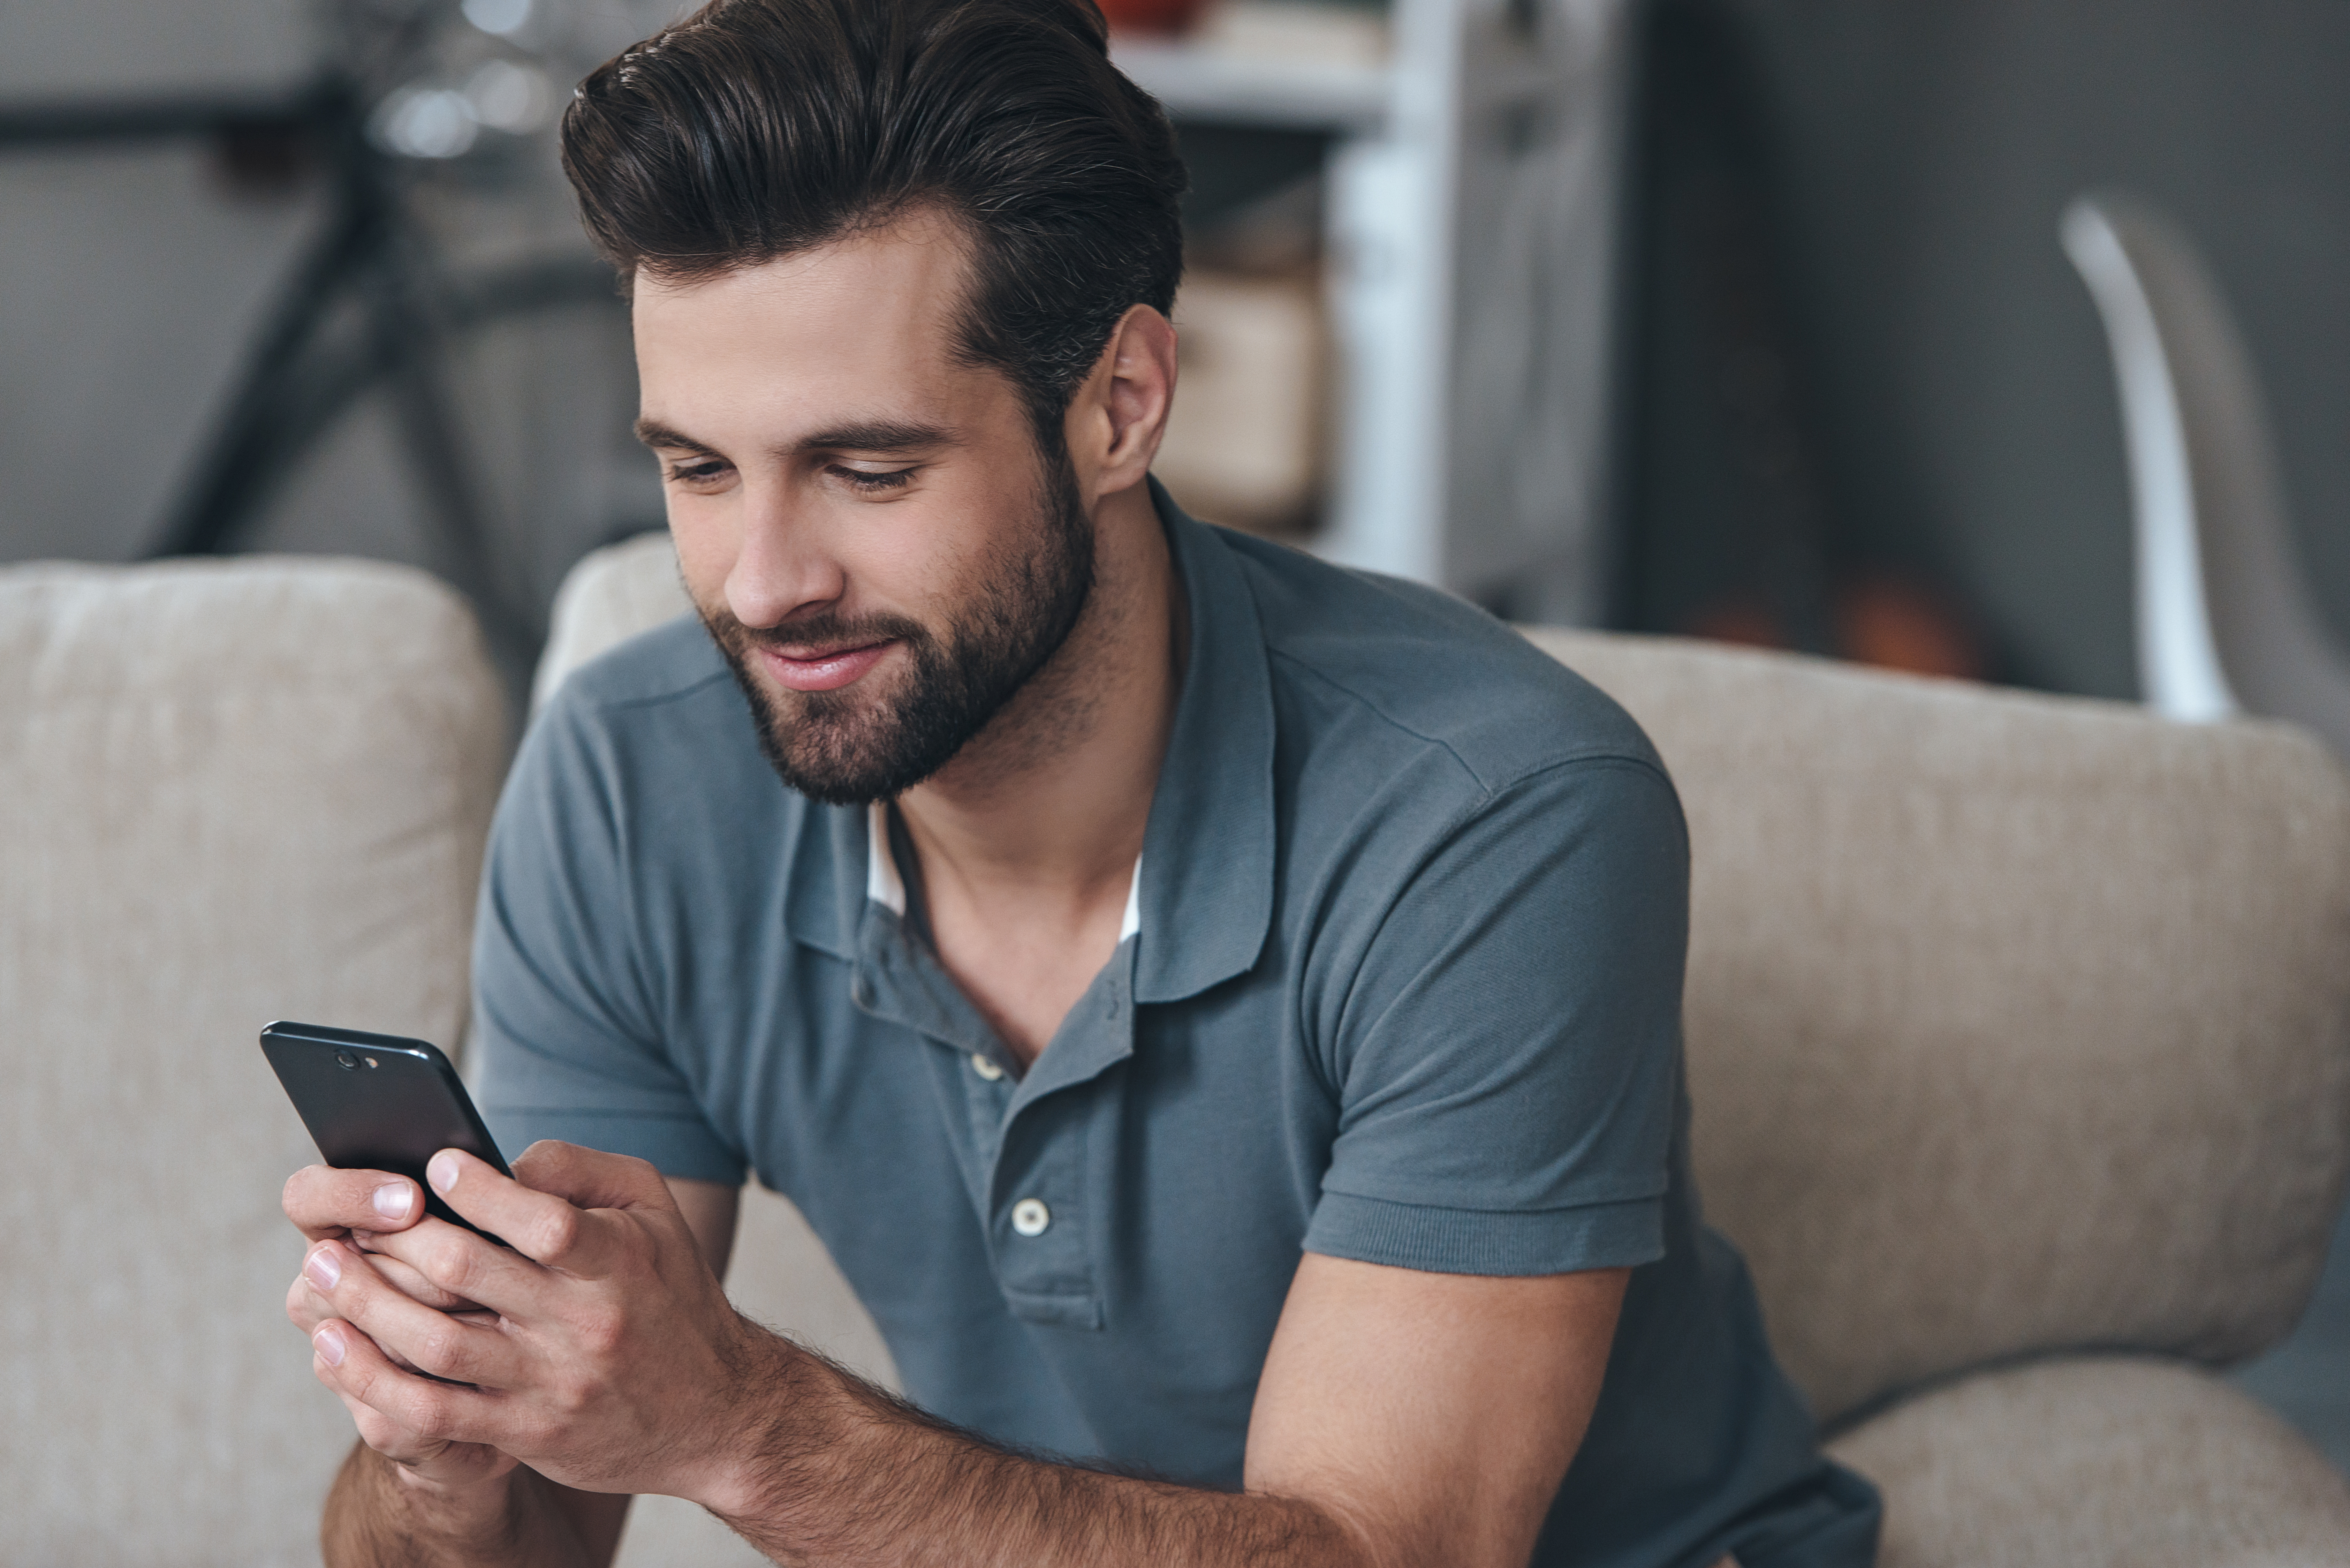 A man texting | Source: Shutterstock